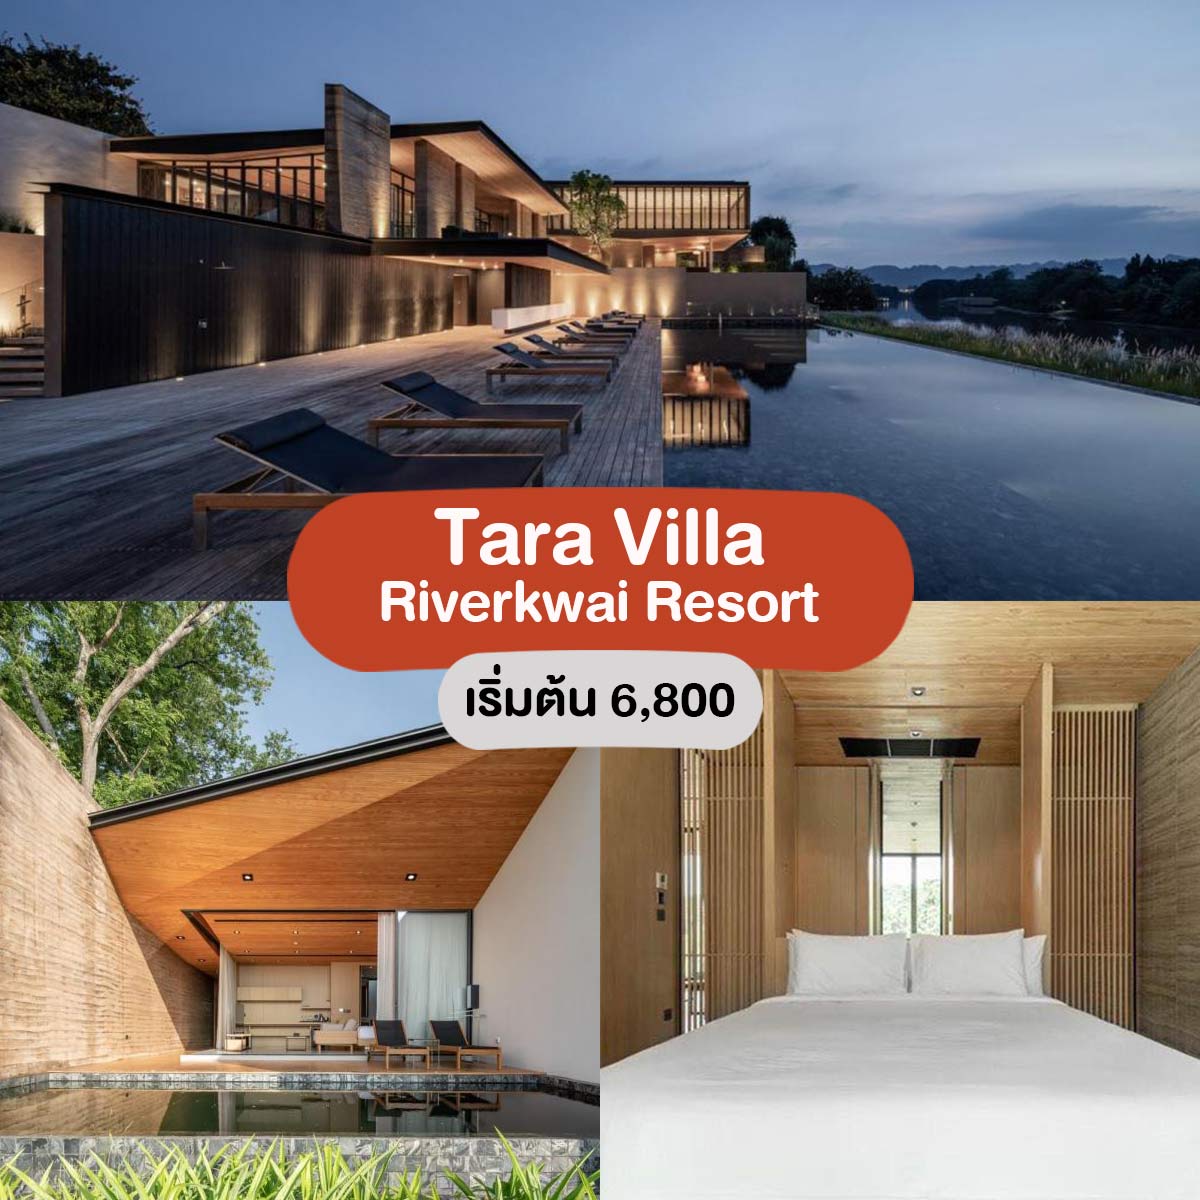 Tara Villa Riverkwai Resort 